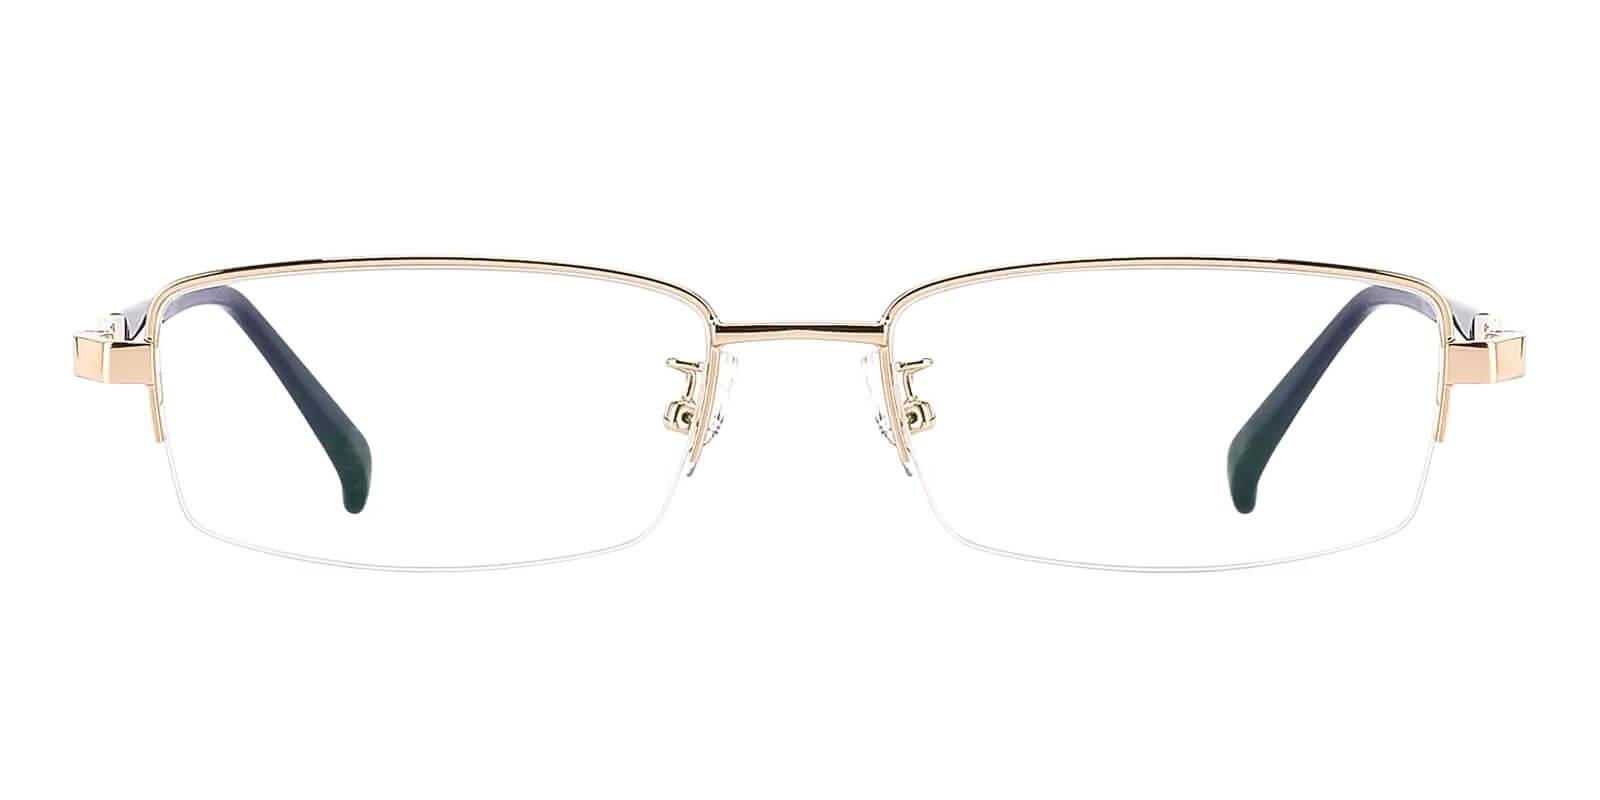 Michael Gold Metal Eyeglasses , NosePads , SpringHinges Frames from ABBE Glasses